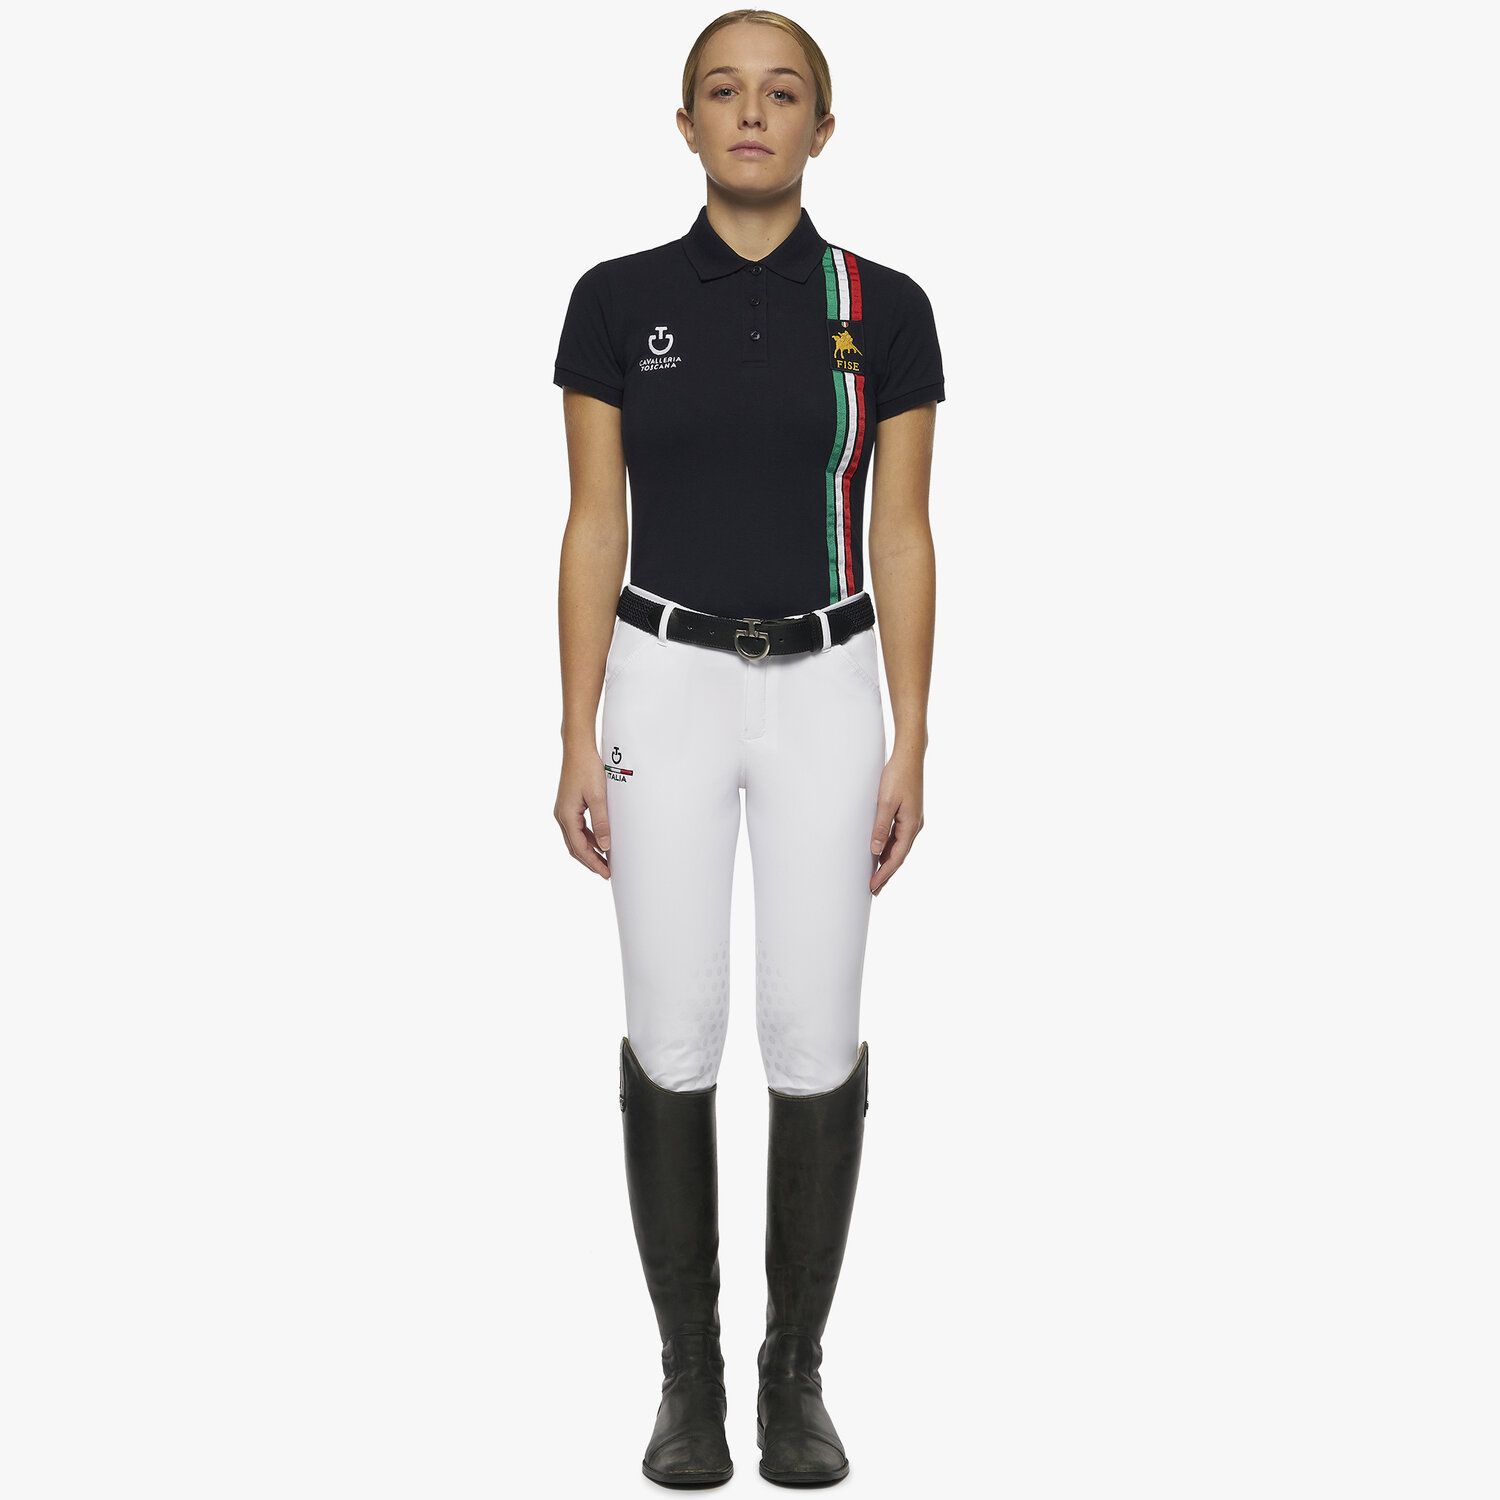 Cavalleria Toscana Girl's FISE polo with short sleeves. NAVY-1